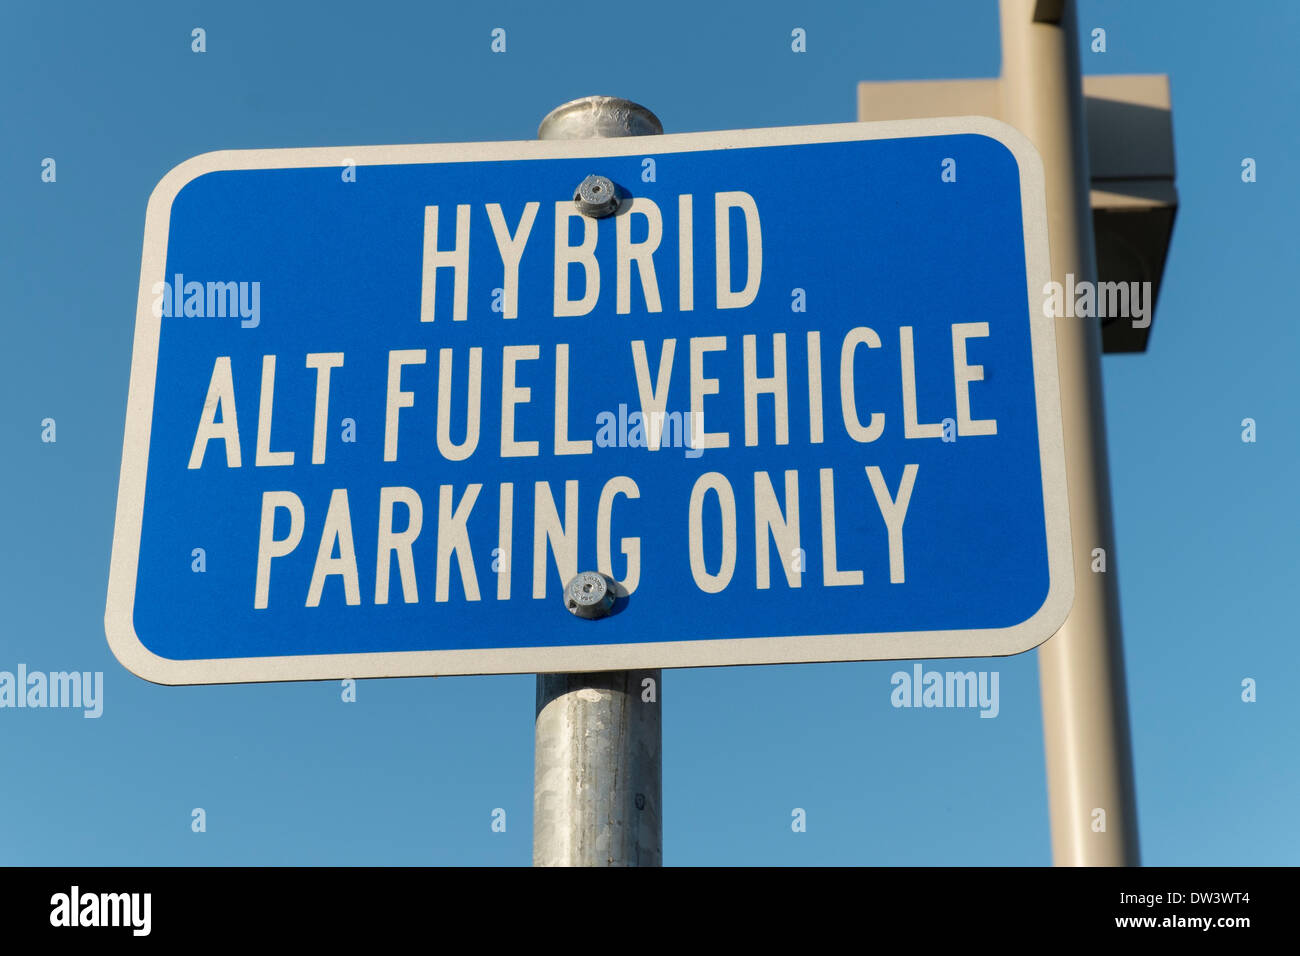 United States, California, Davis, Hybrid alternative fuel vehicle parking only sign Stock Photo